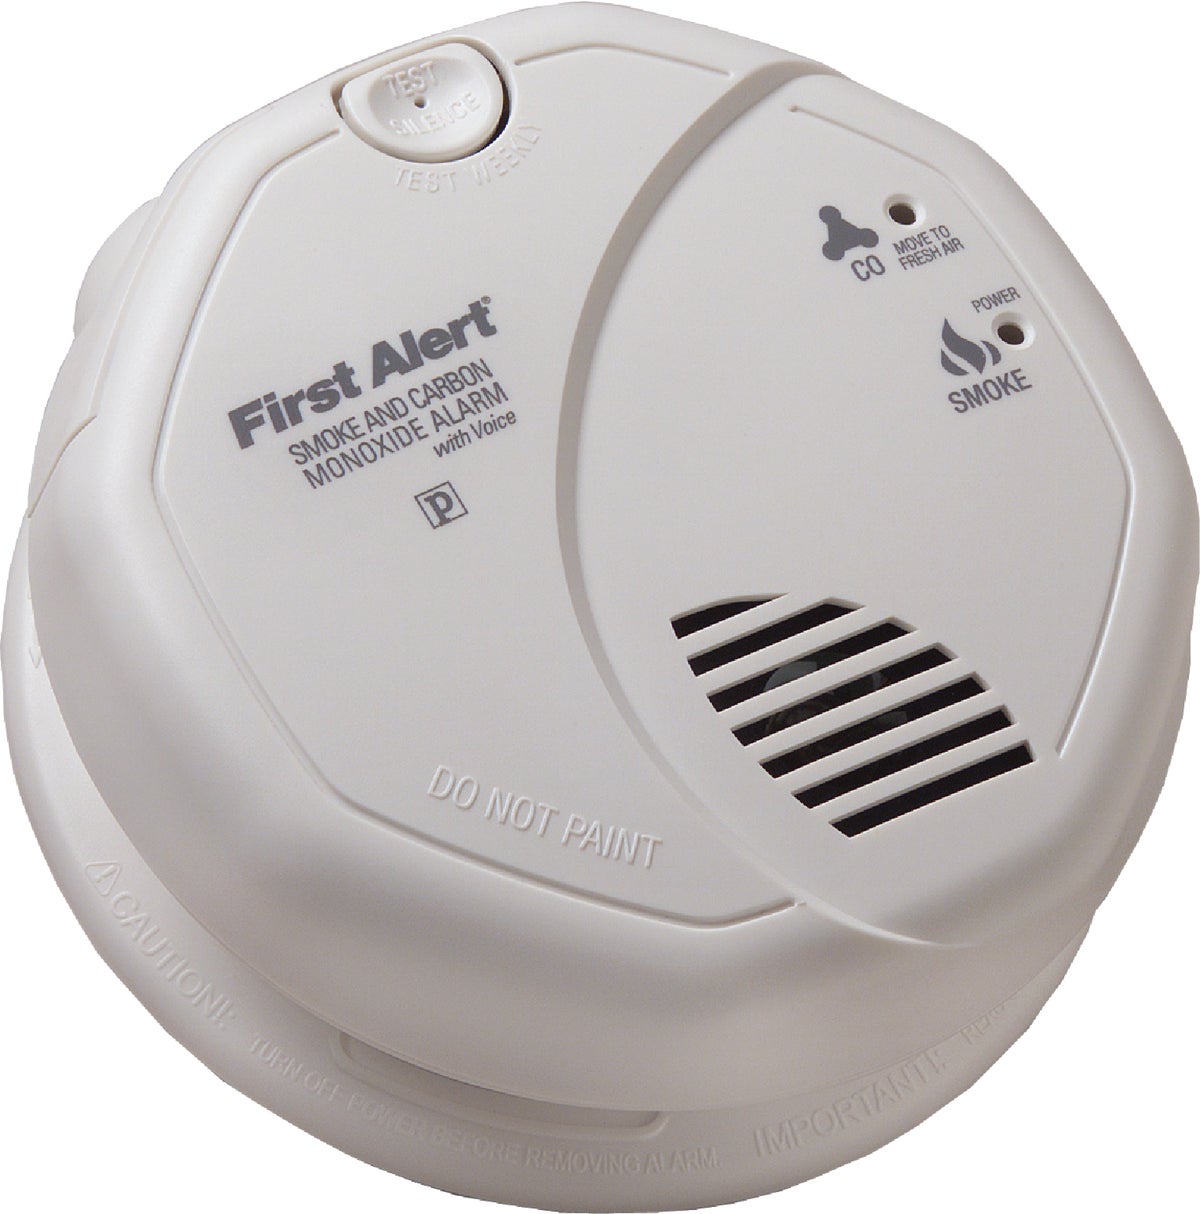 first alert smoke and carbon monoxide alarm reviews